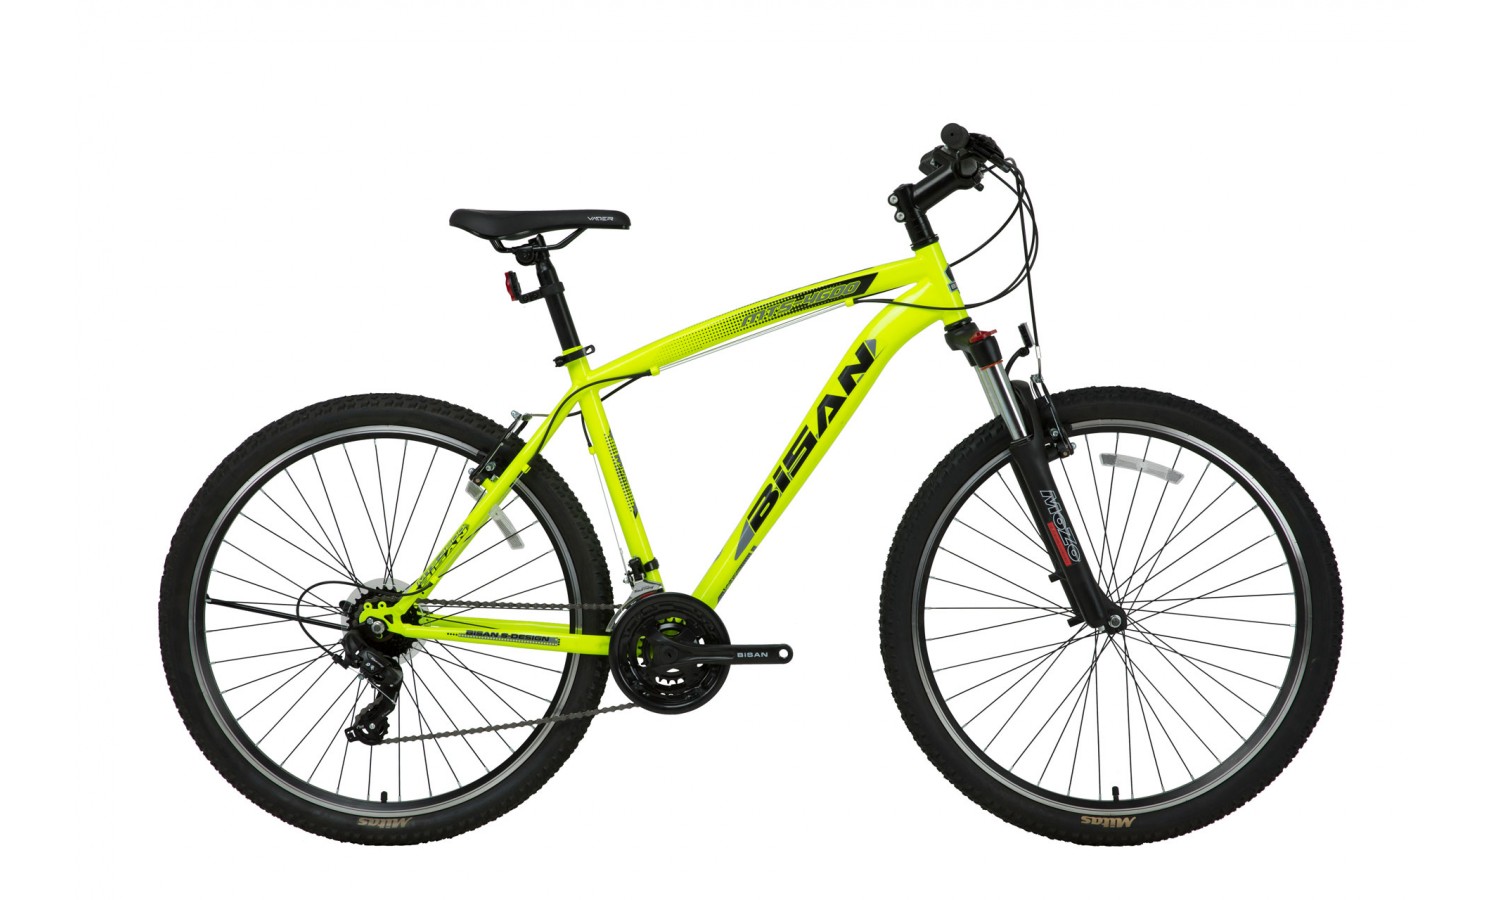 Bisan Mts 4600 27.5 V Dağ Bisikleti (Neon Sarı Siyah)